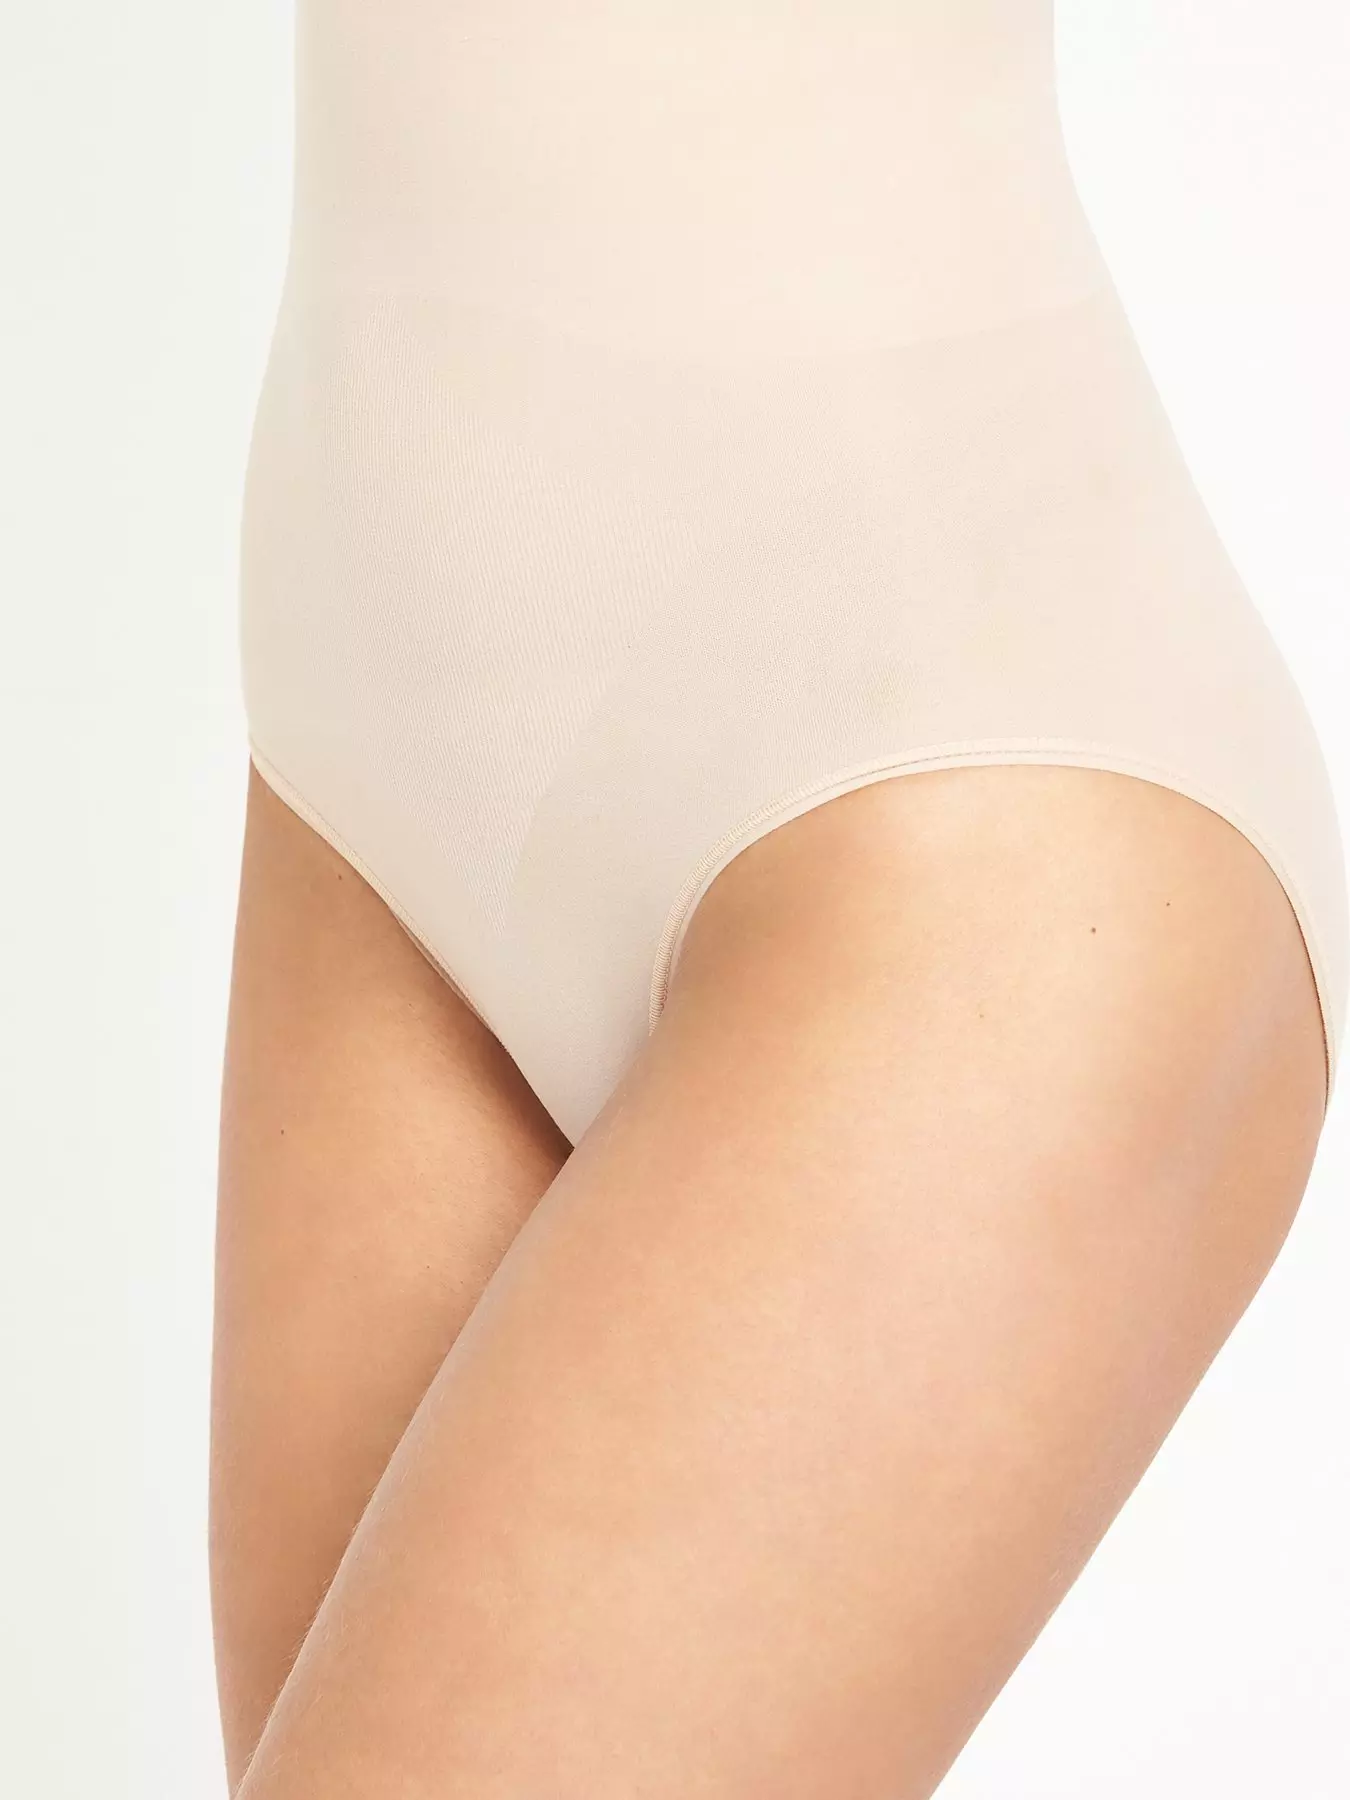 Actishape  Buy Women's Plus Size Padded Butt Shaper Underwear Ireland & UK  – ActiShape